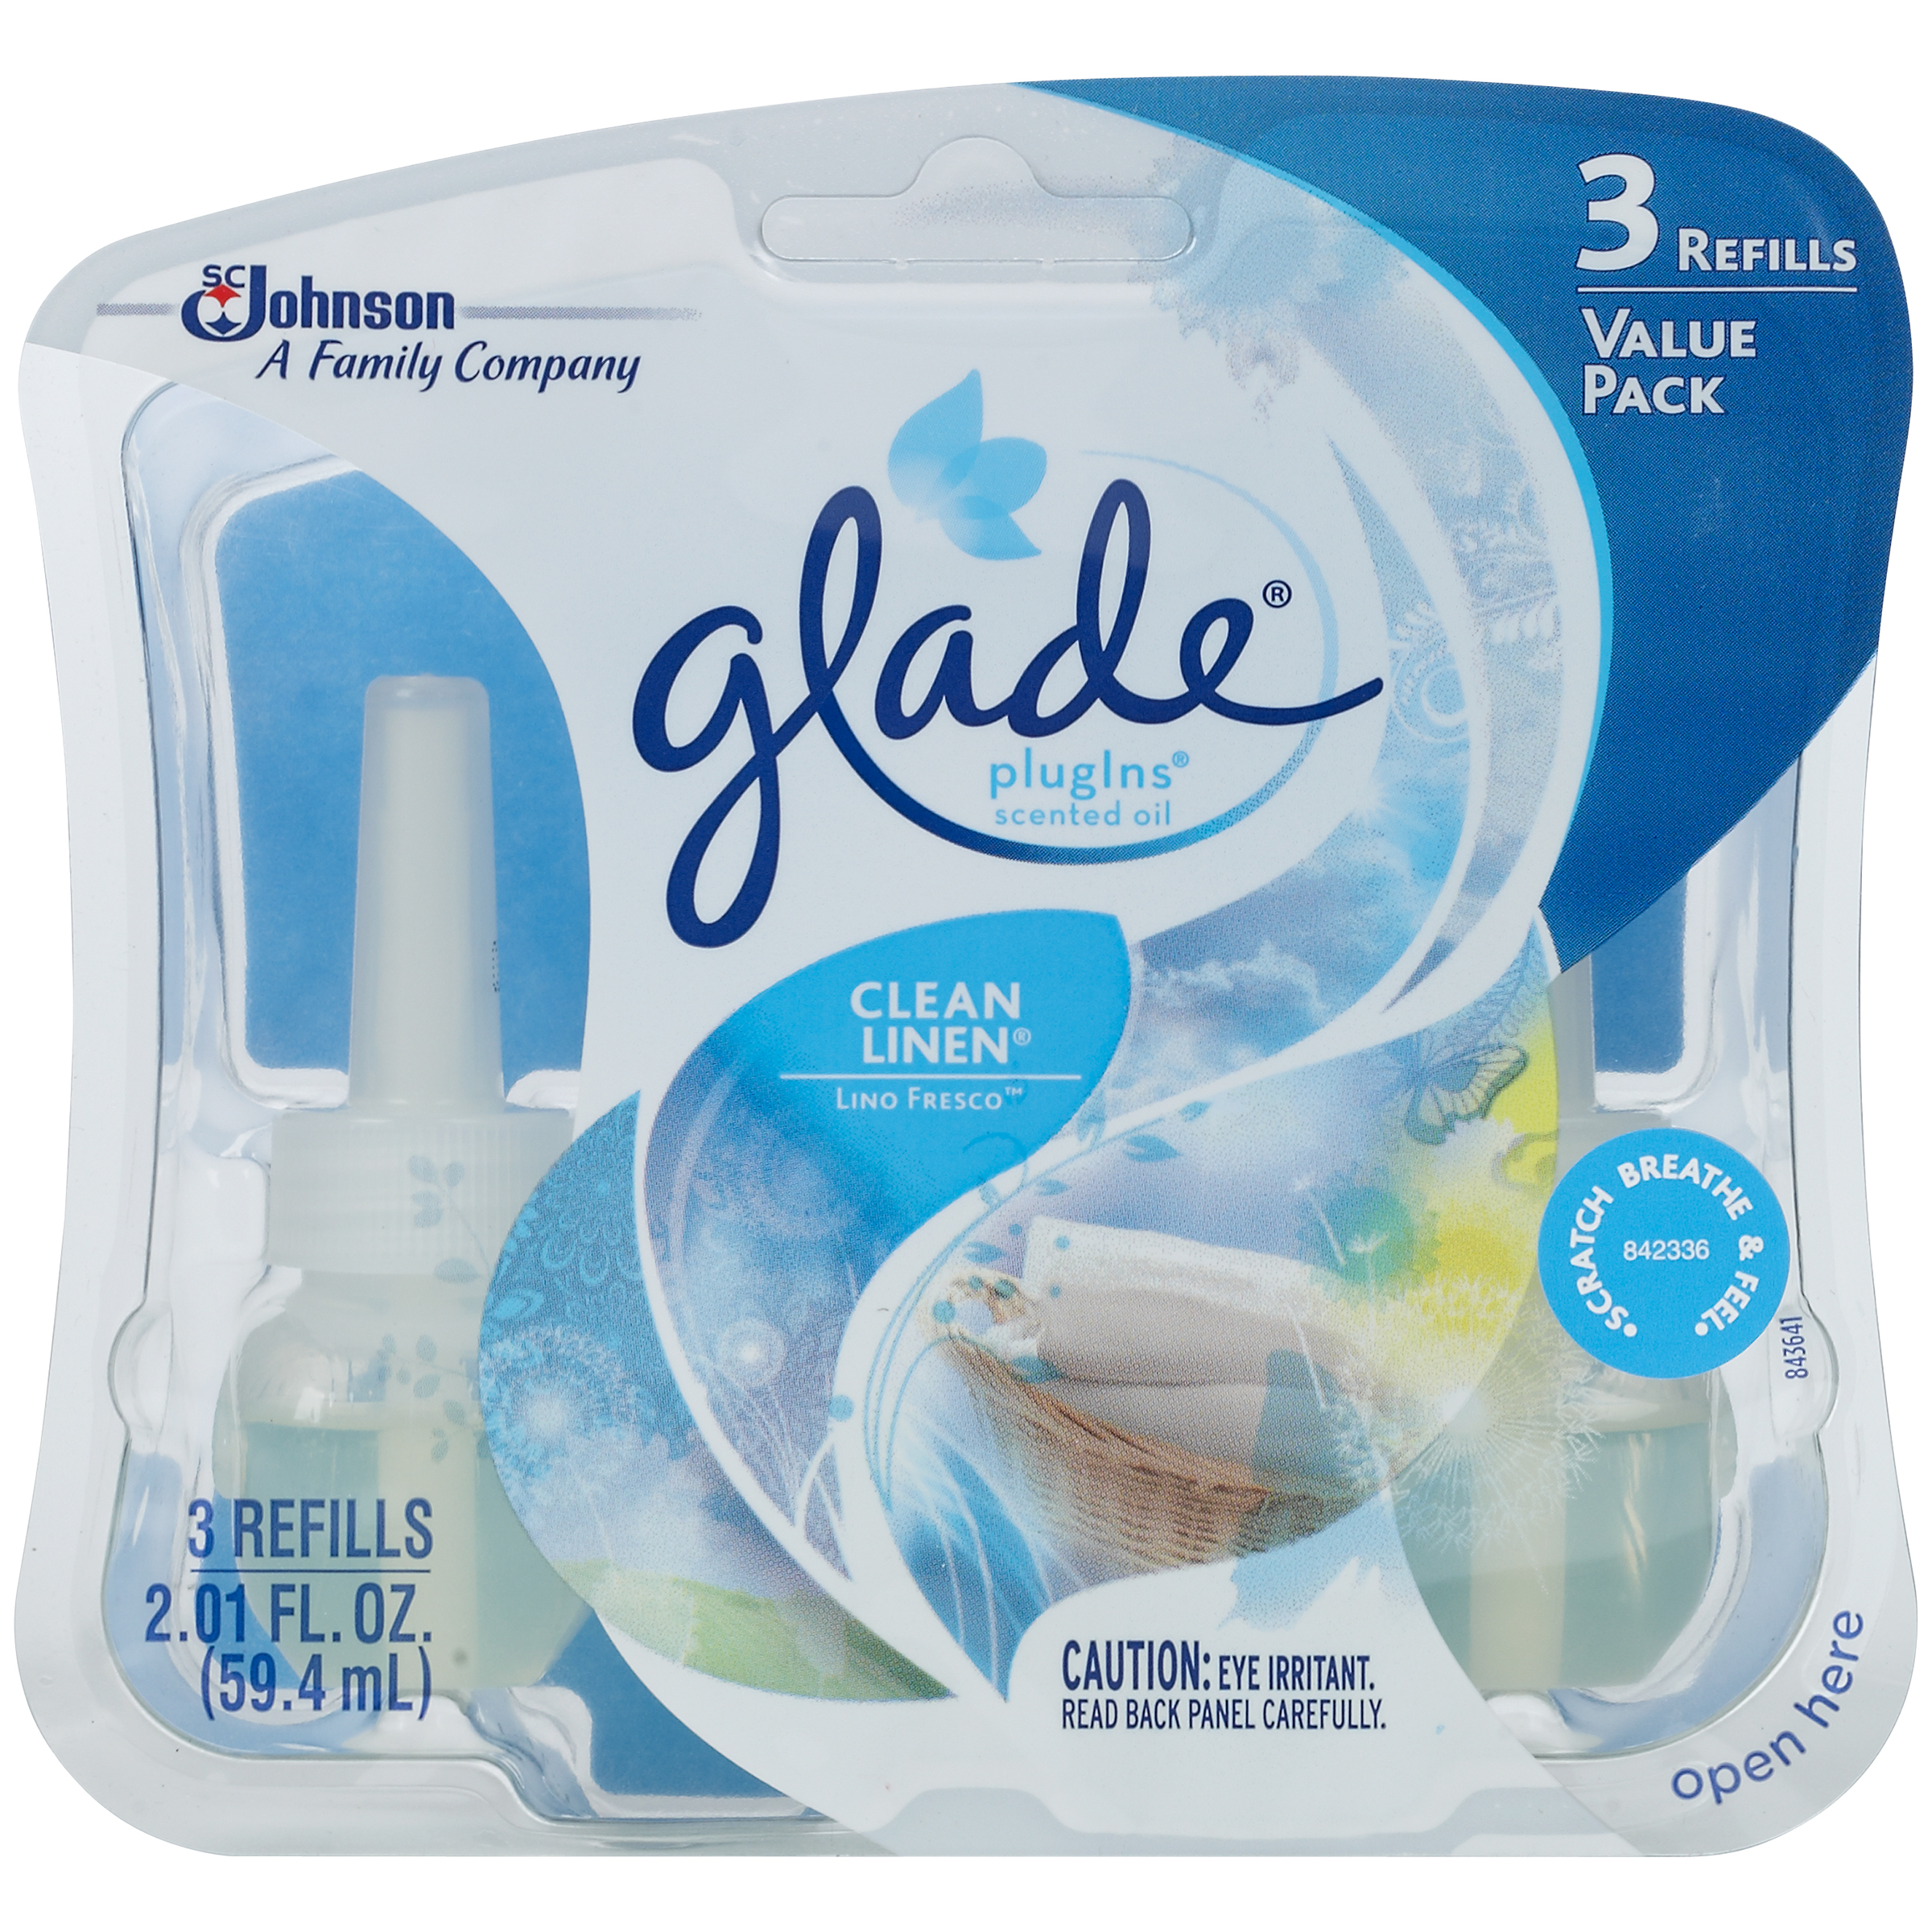 Glade PlugIns Clean Linen Scented Oil Refill Freshener 2.01 FL OZ